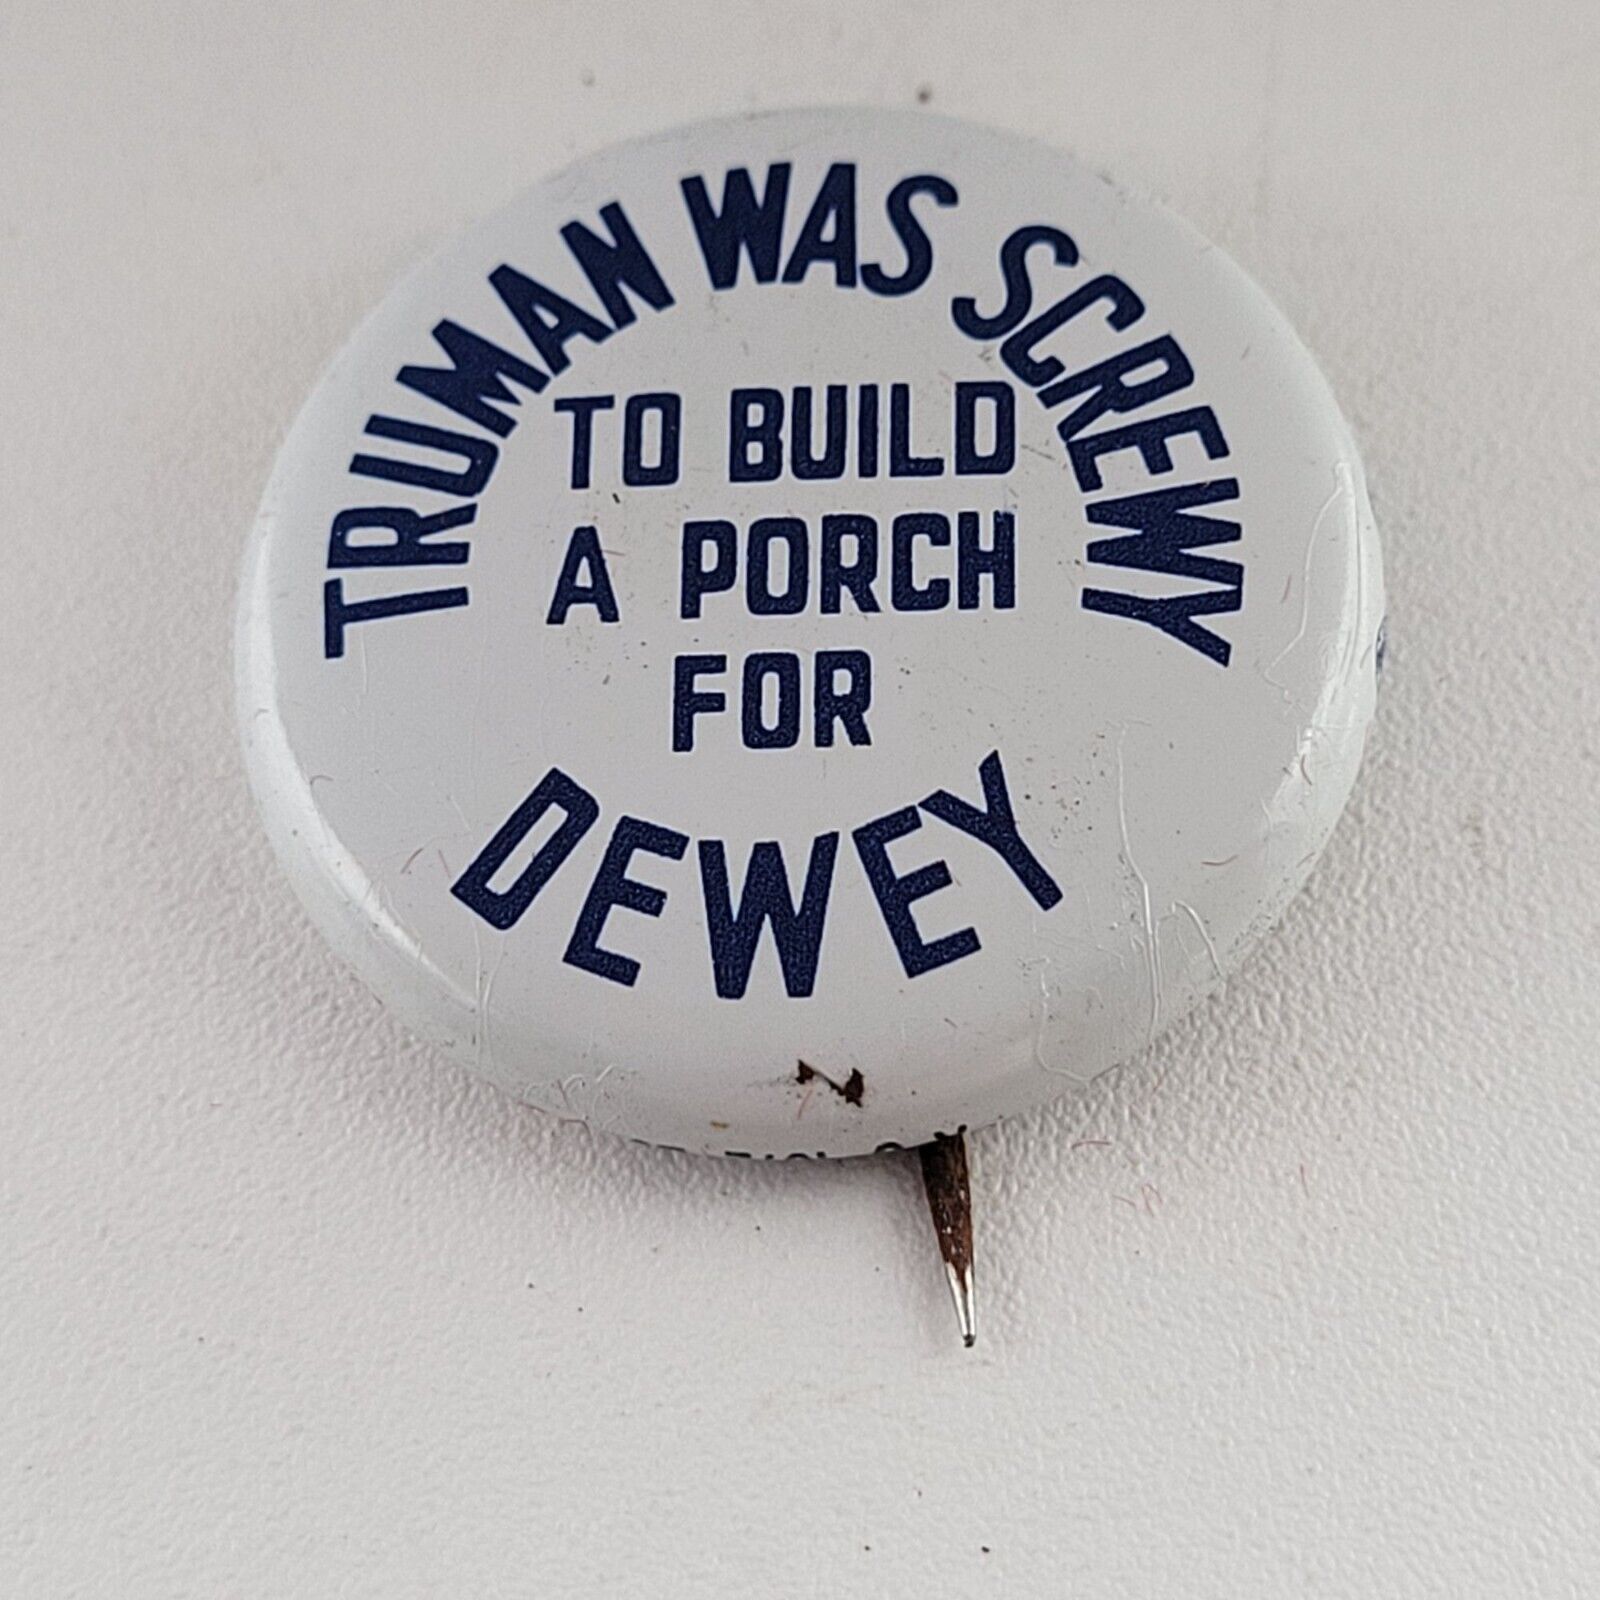 1948 Dewey - TRUMAN WAS SCREWY 1\